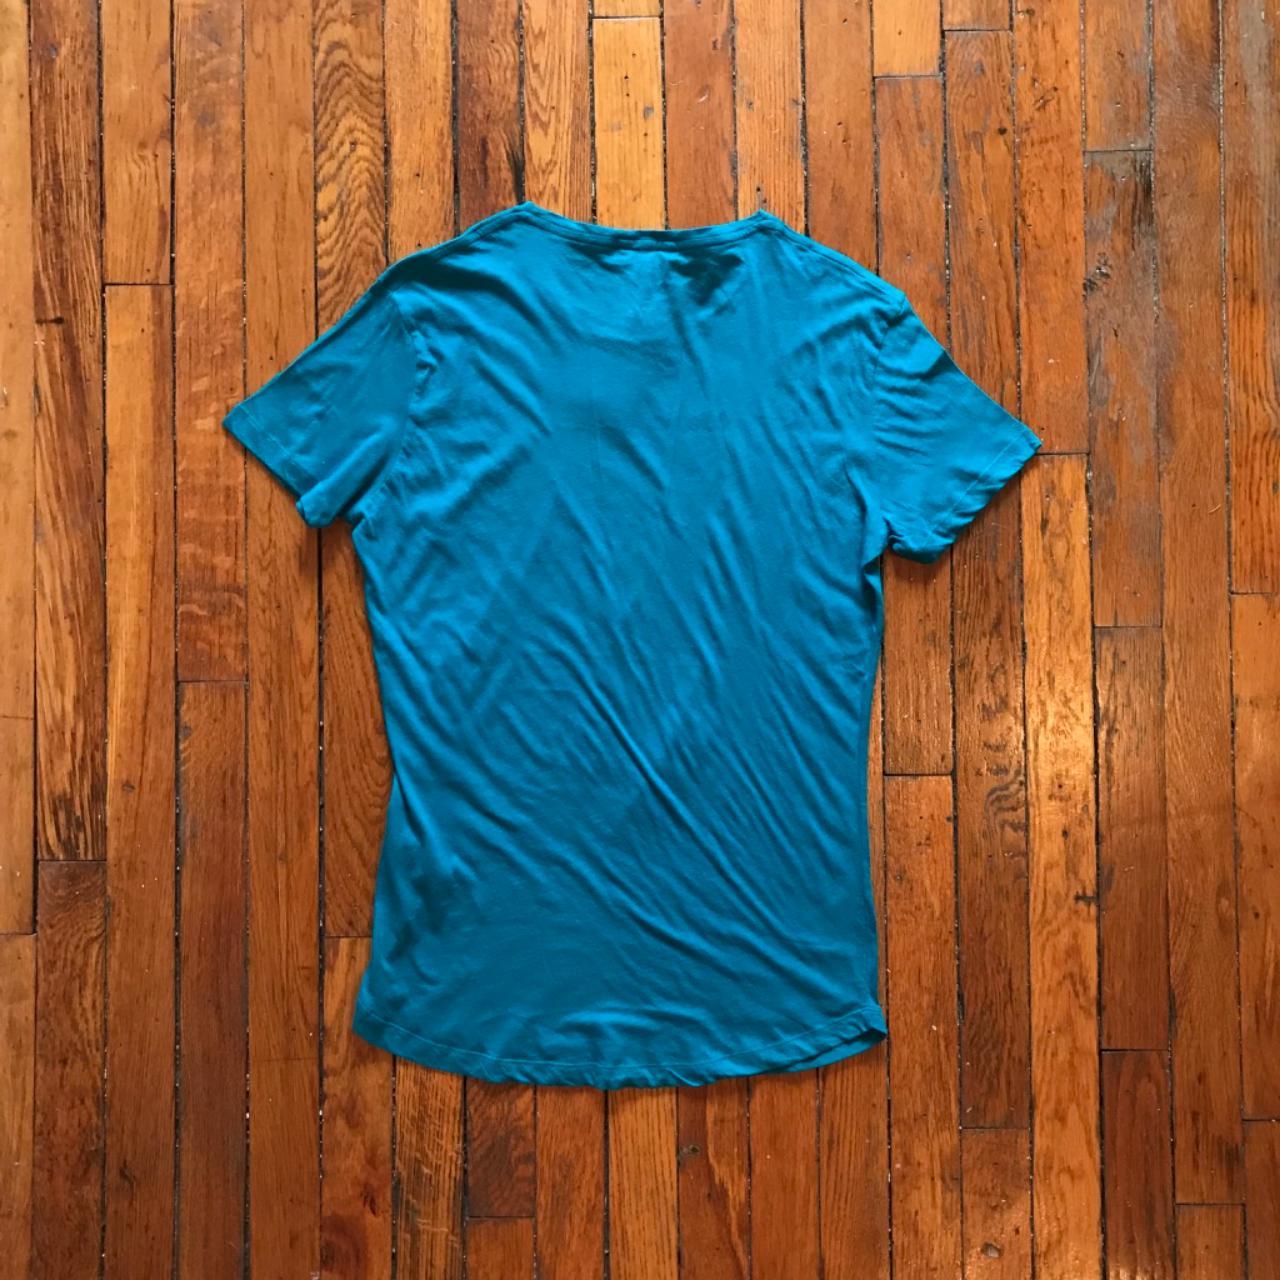 Orlebar Brown Men's Blue and Green T-shirt (3)